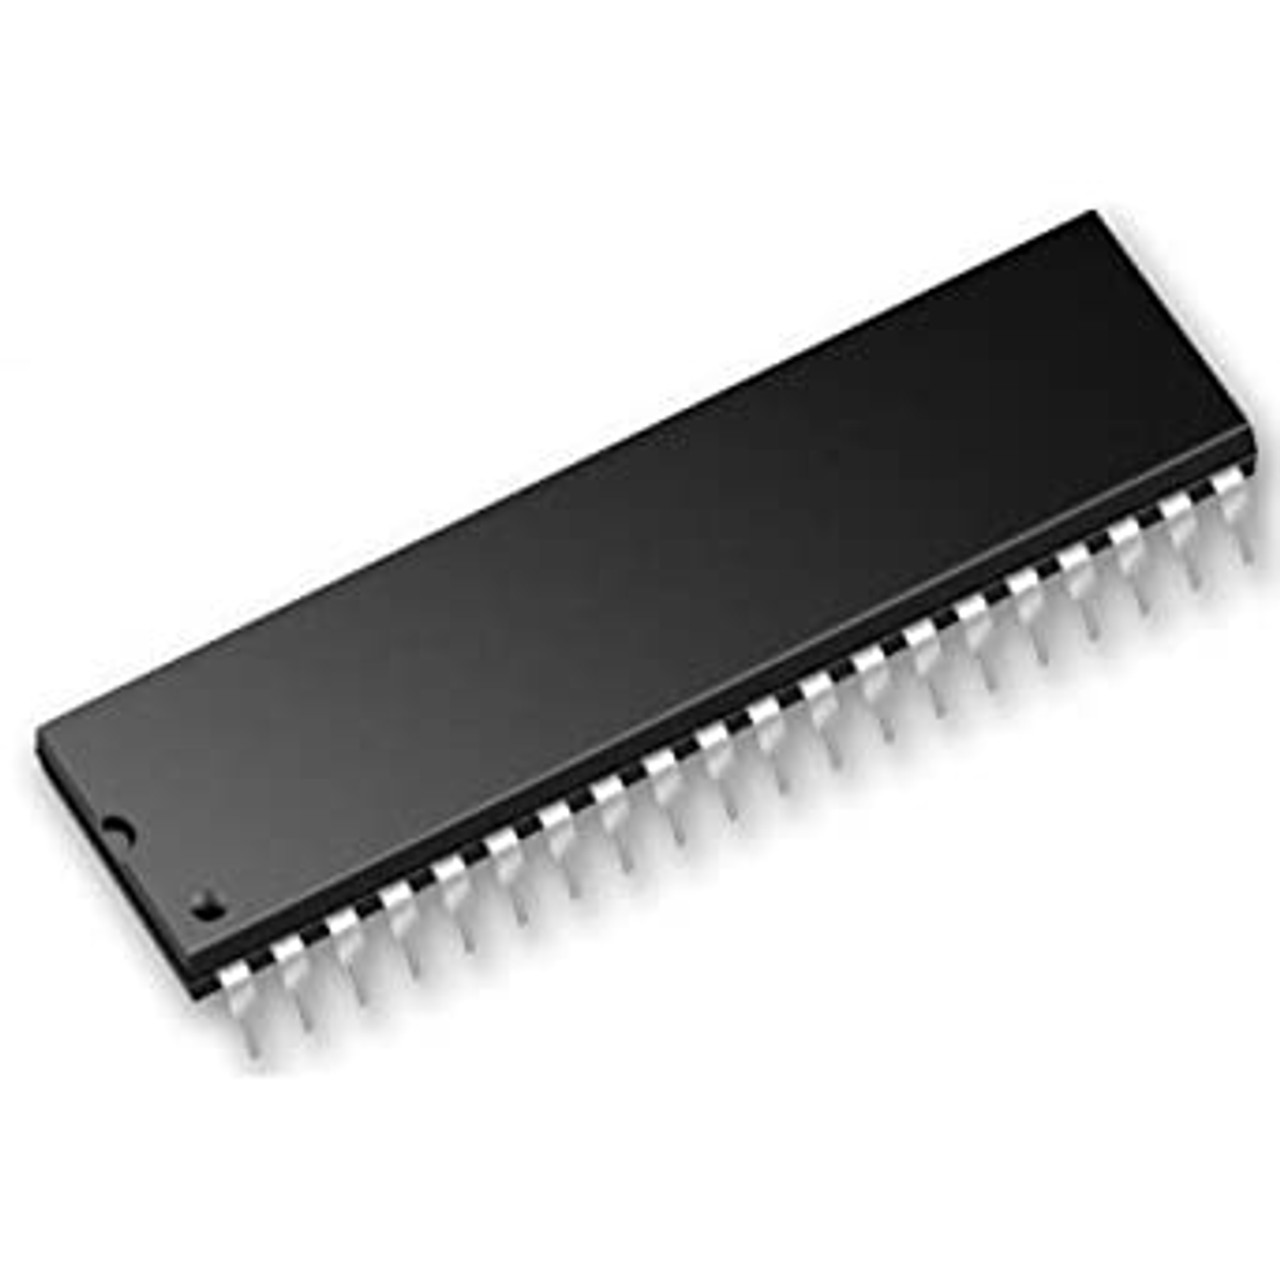 AT89C2051-24PU CMOS 8bit Microcontroller 2K Flash IC